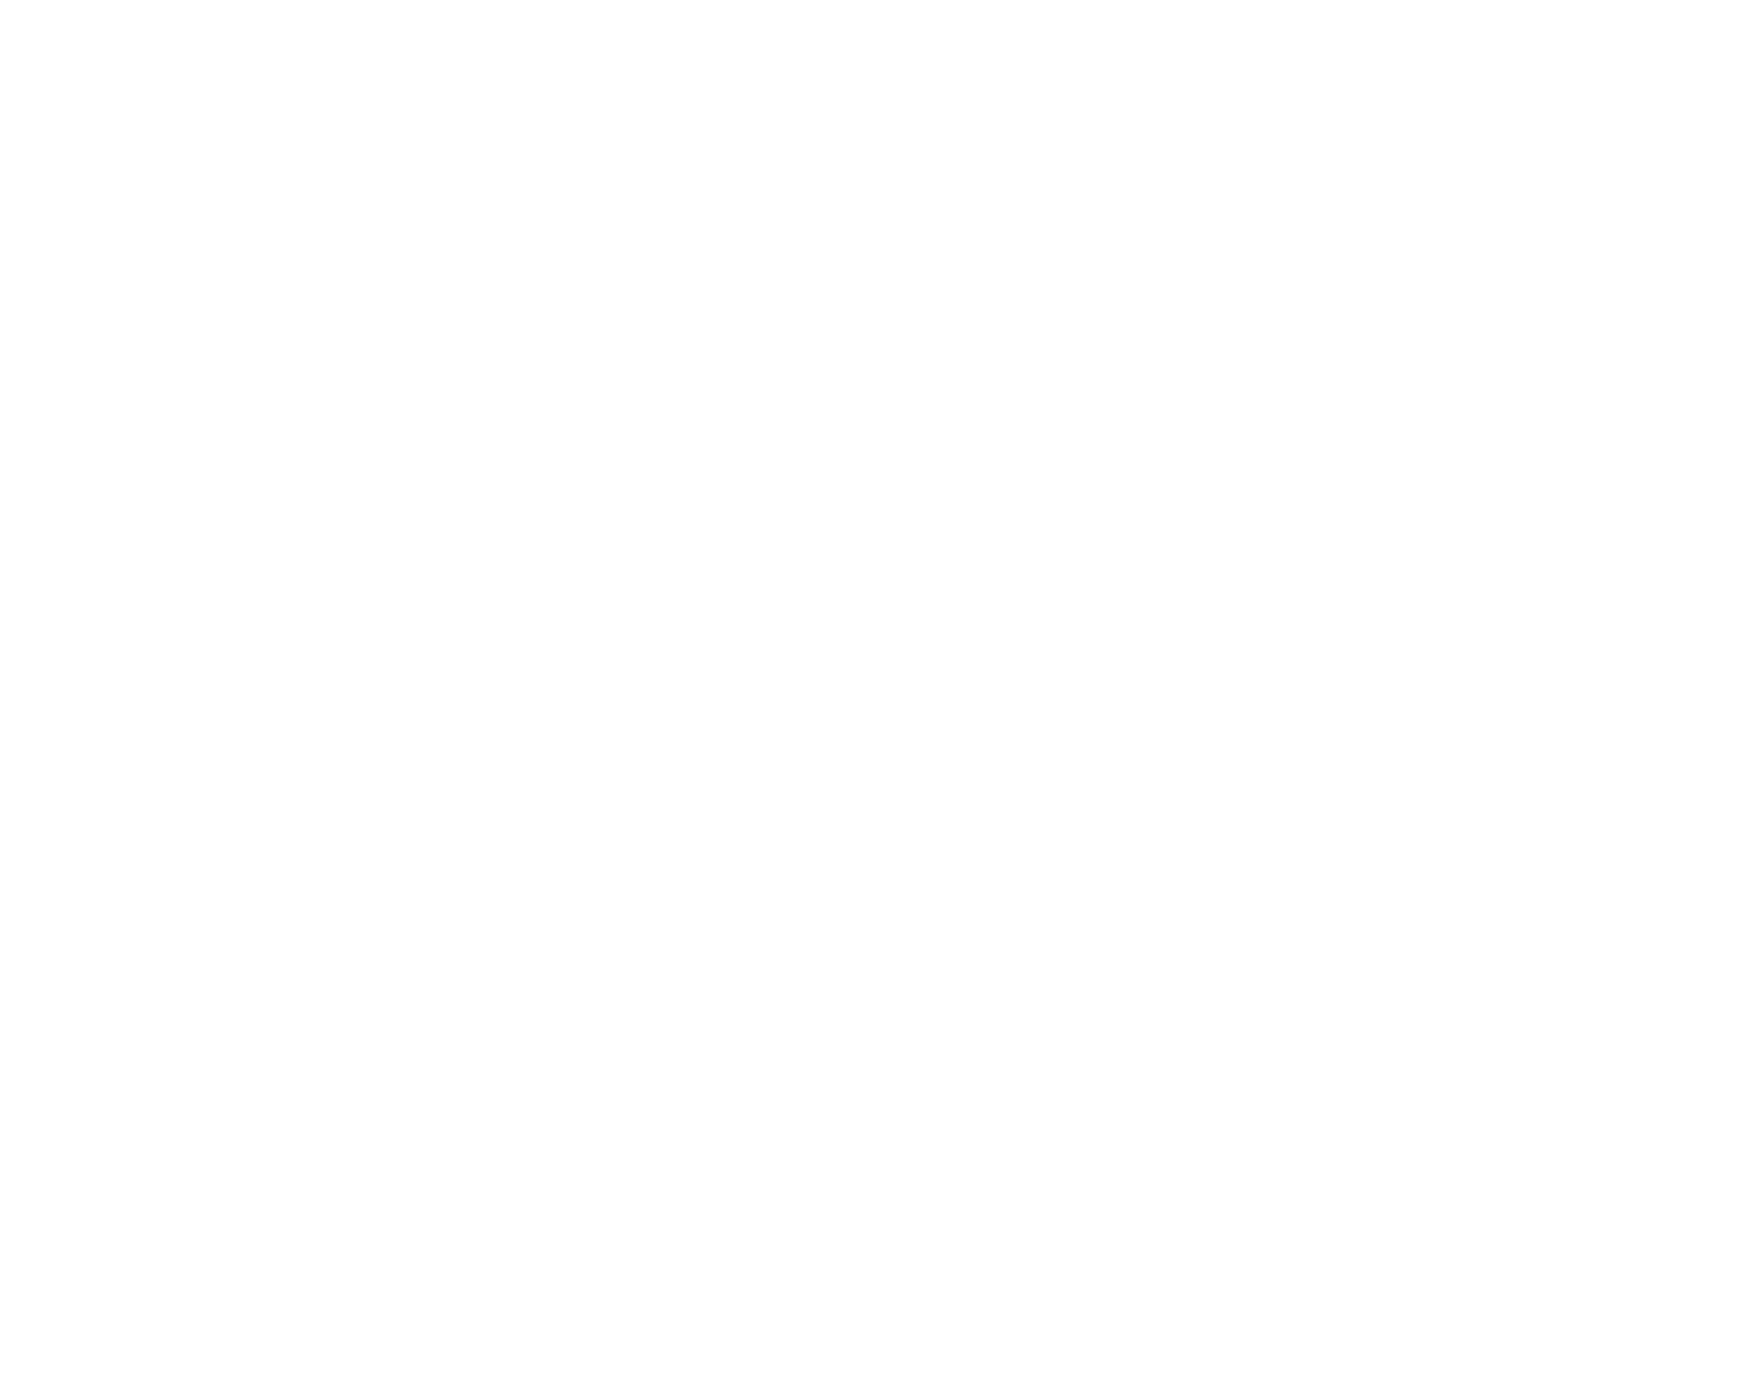 Sello_Acreditacion_2019-06